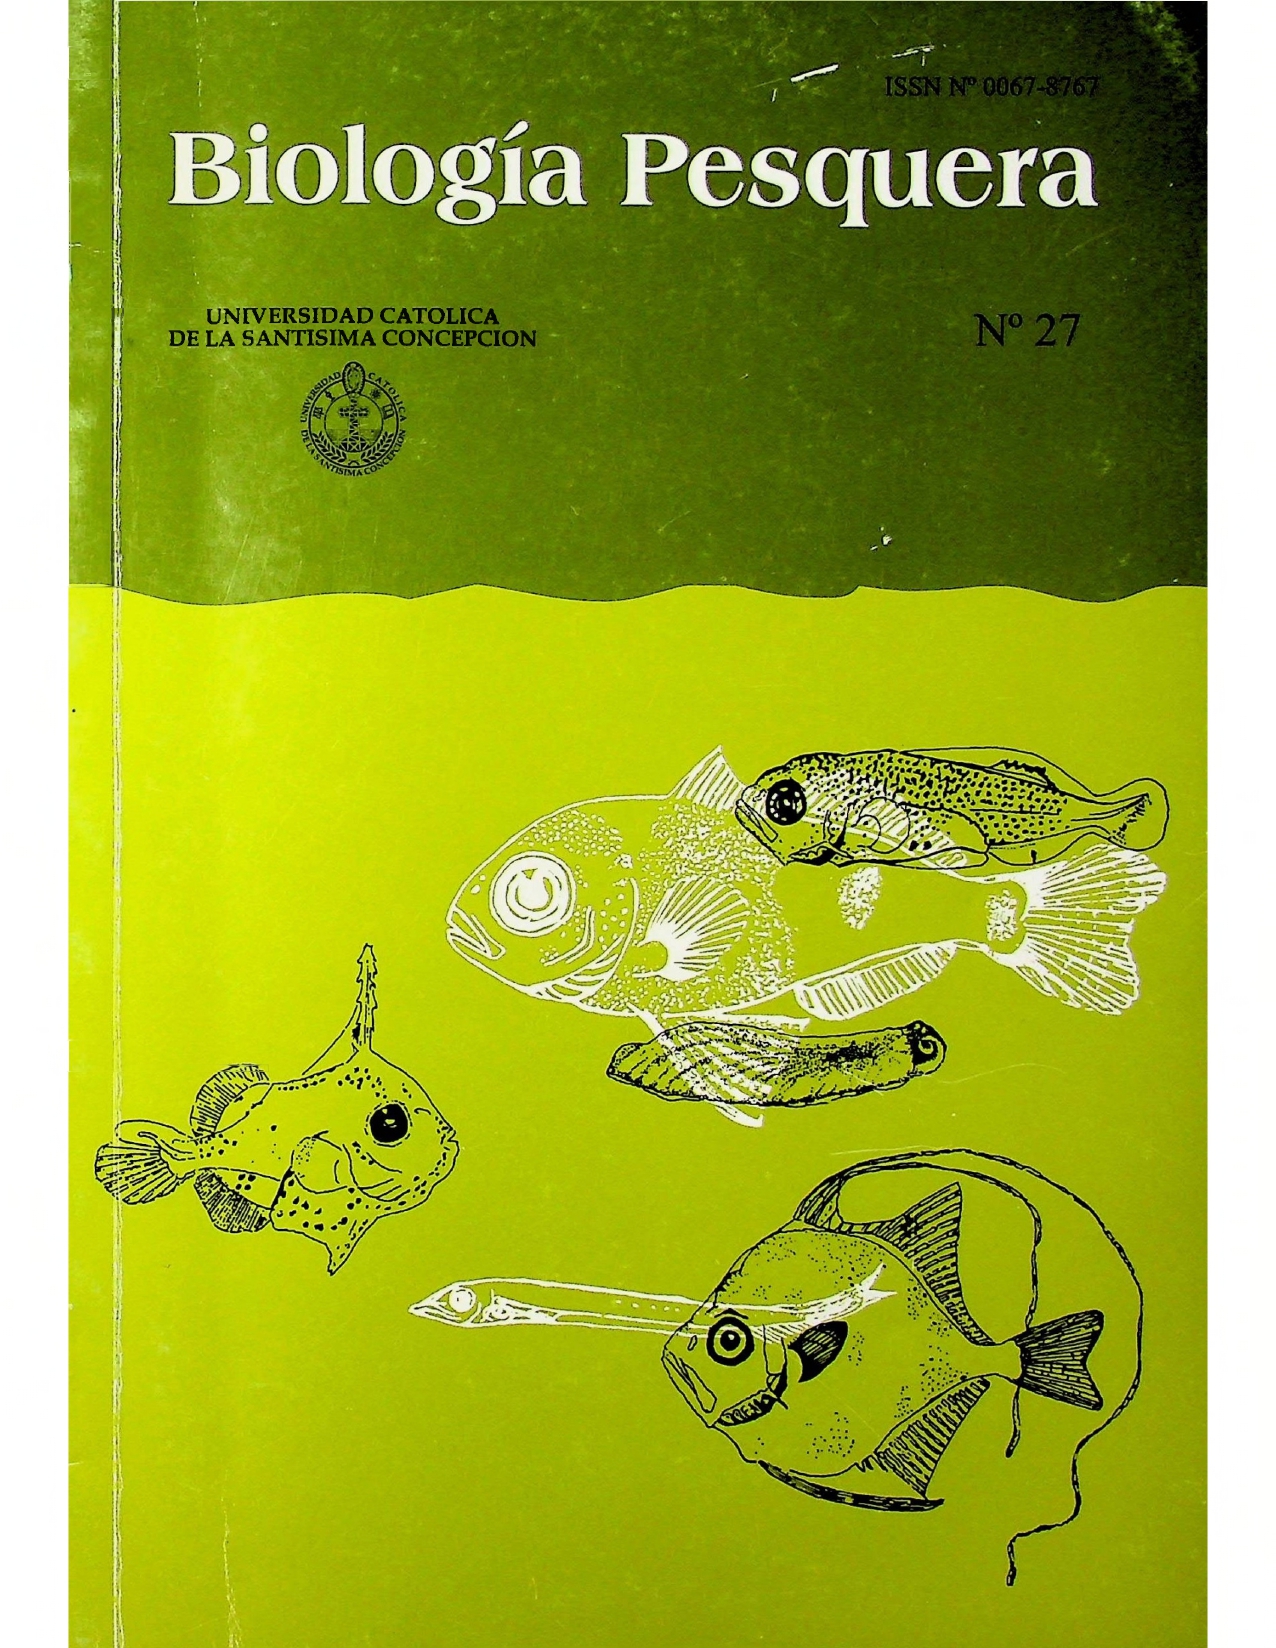 					Ver Núm. 27 (1998): Biología Pesquera
				